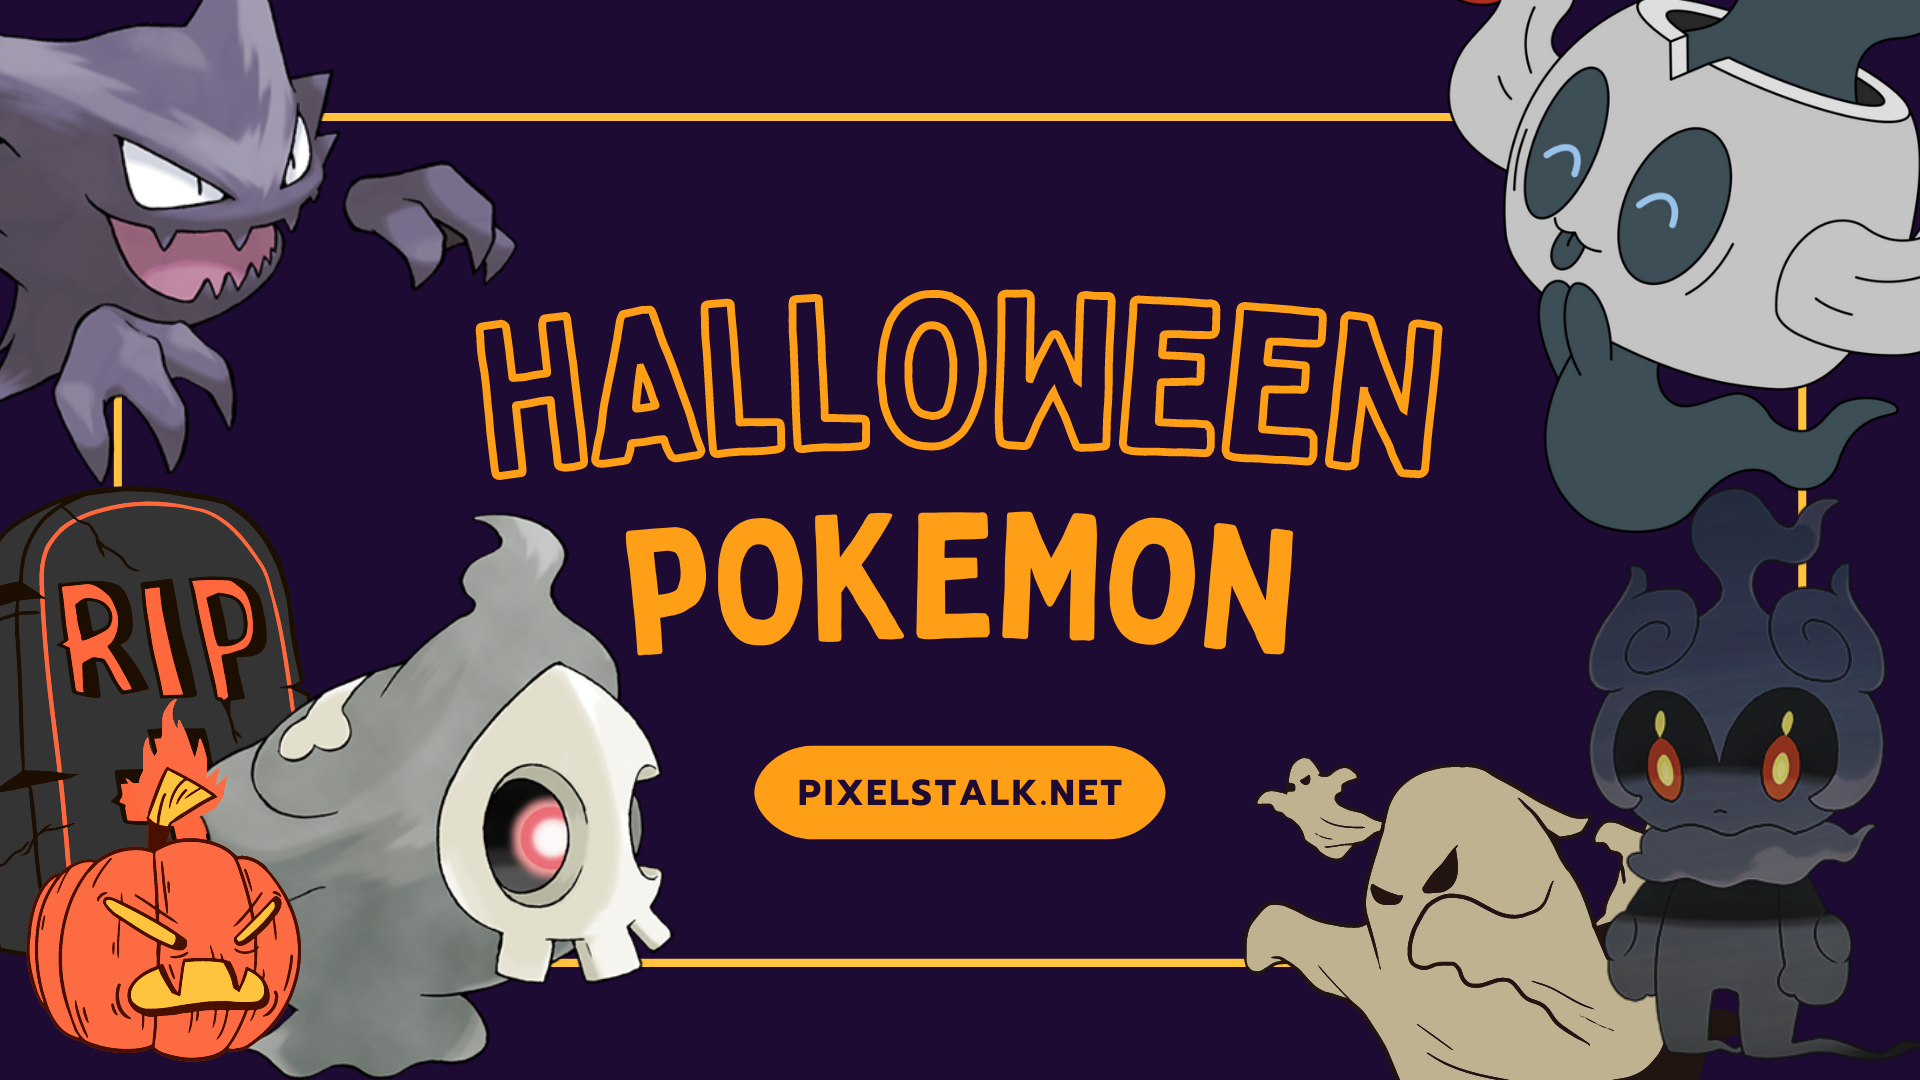 Pokémon Go in Halloween colors  just focus